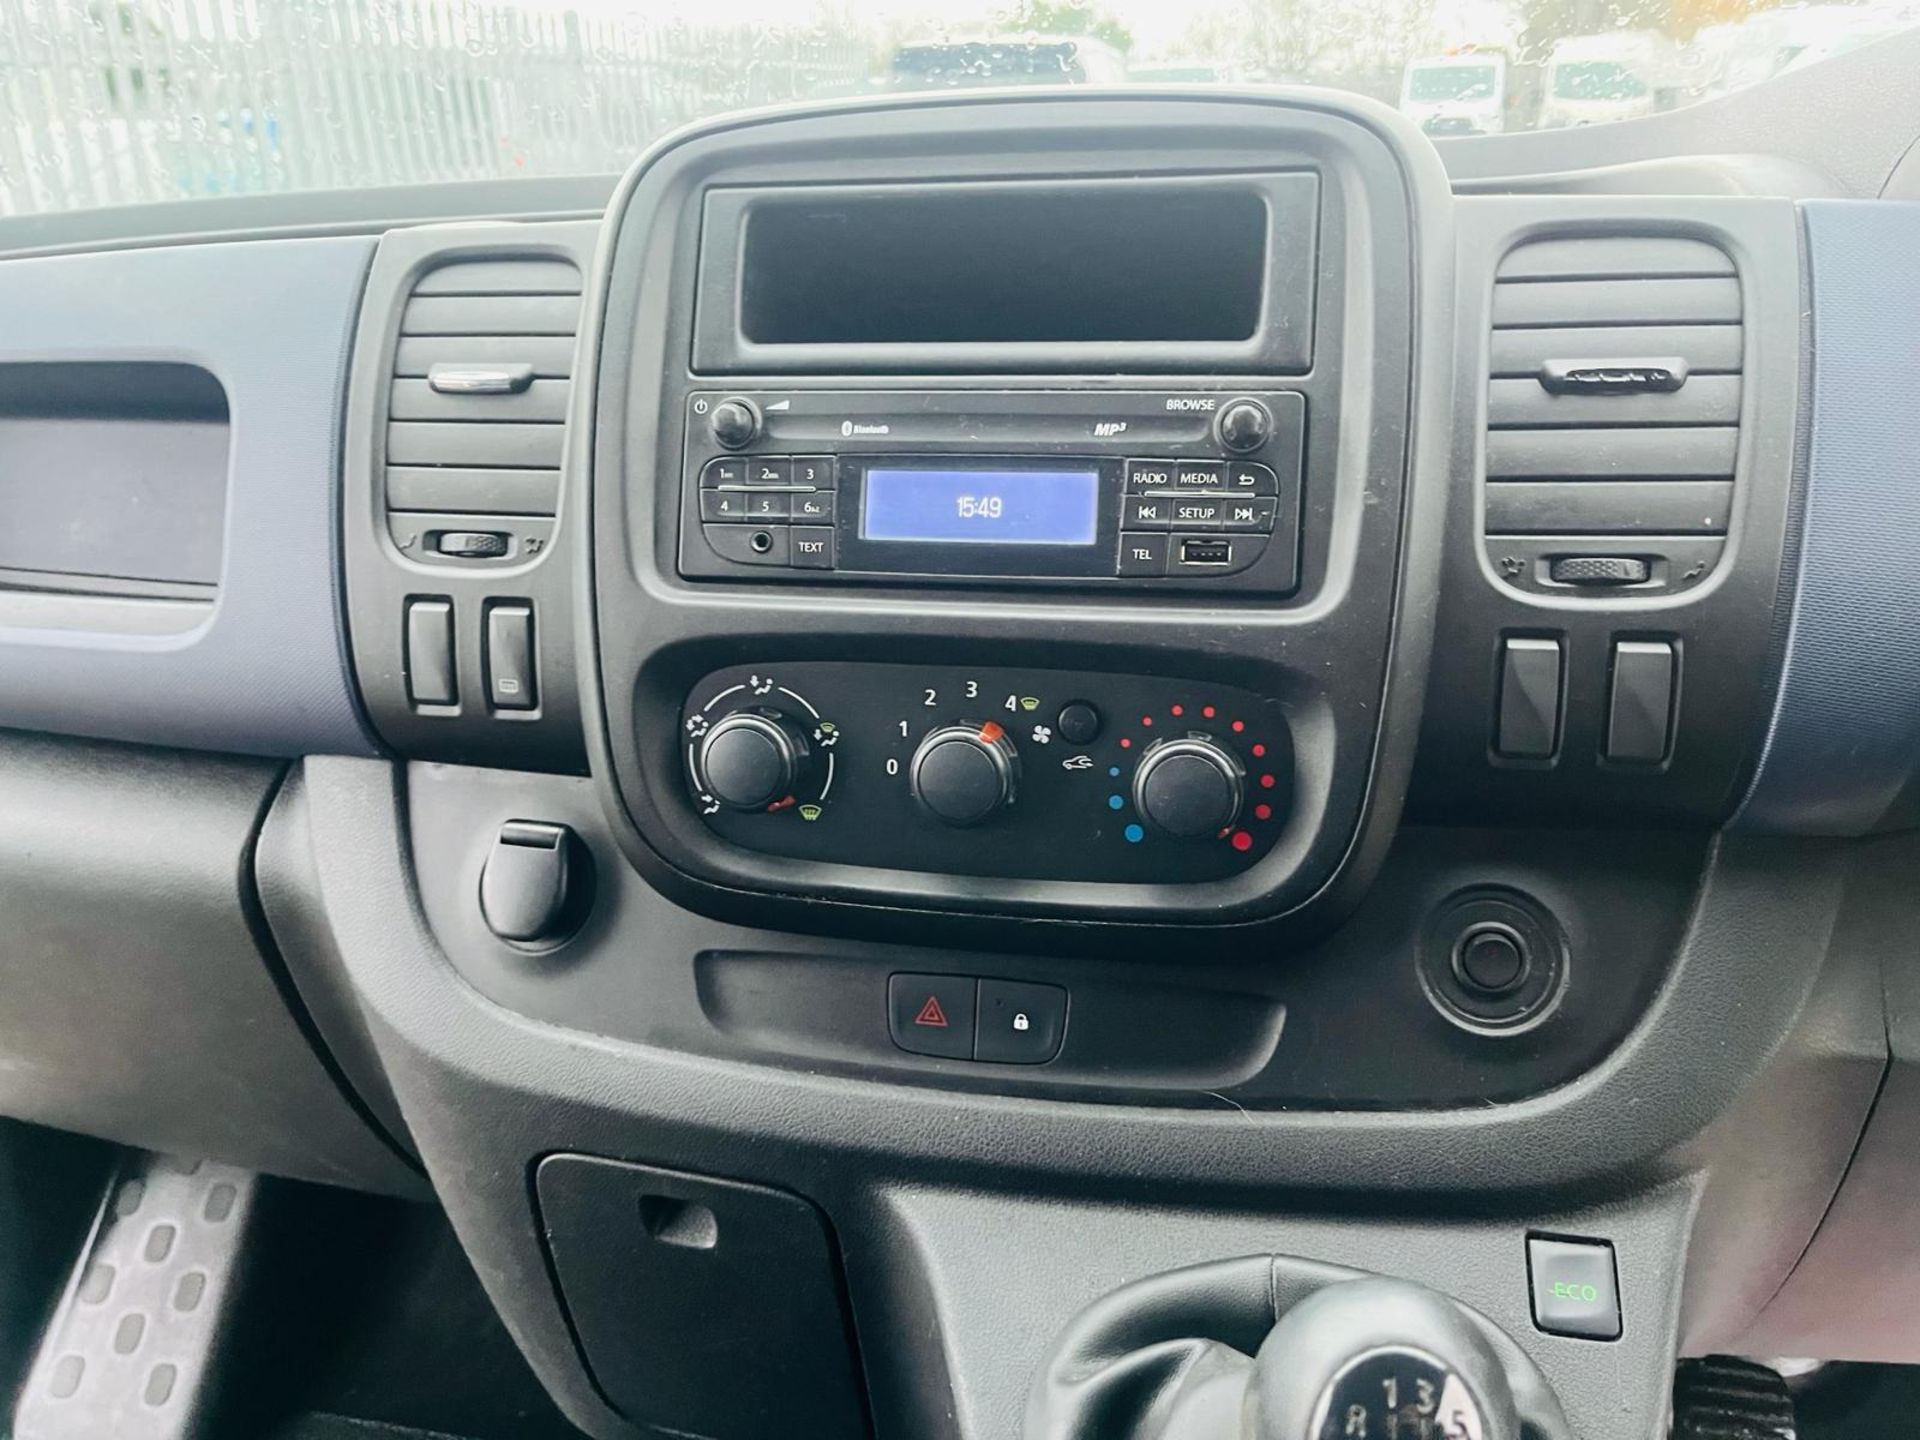 ** ON SALE ** Vauxhall Vivaro 1.6 CDTI LWB L1 115 2015 '15 Reg' Panel Van - No Vat - Long wheel base - Image 20 of 27